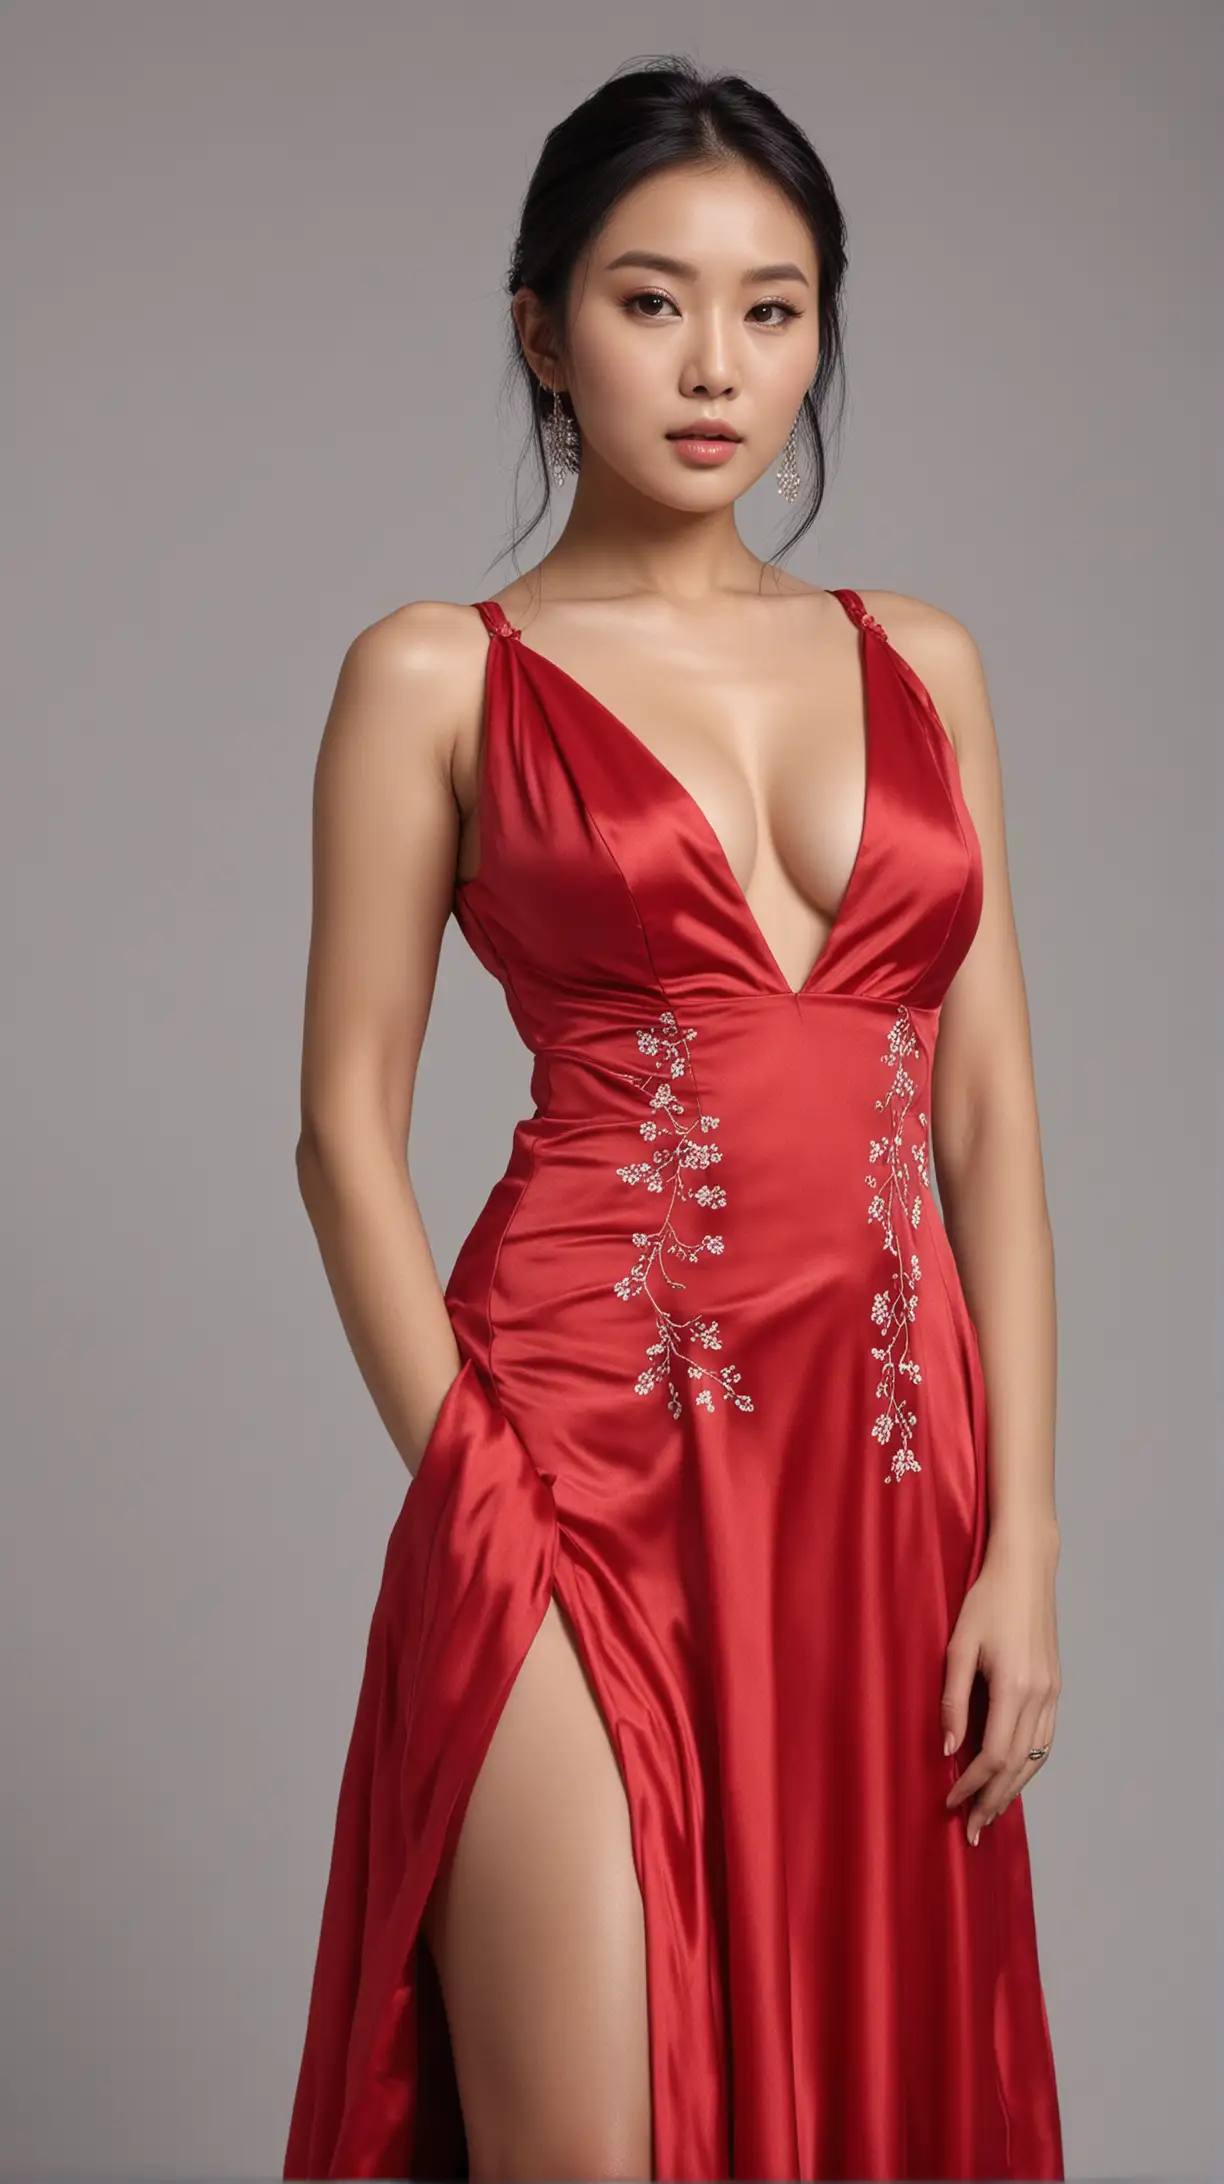 Elegant Asian Woman in Cherry Red Gown Glamorous Fashion Portrait